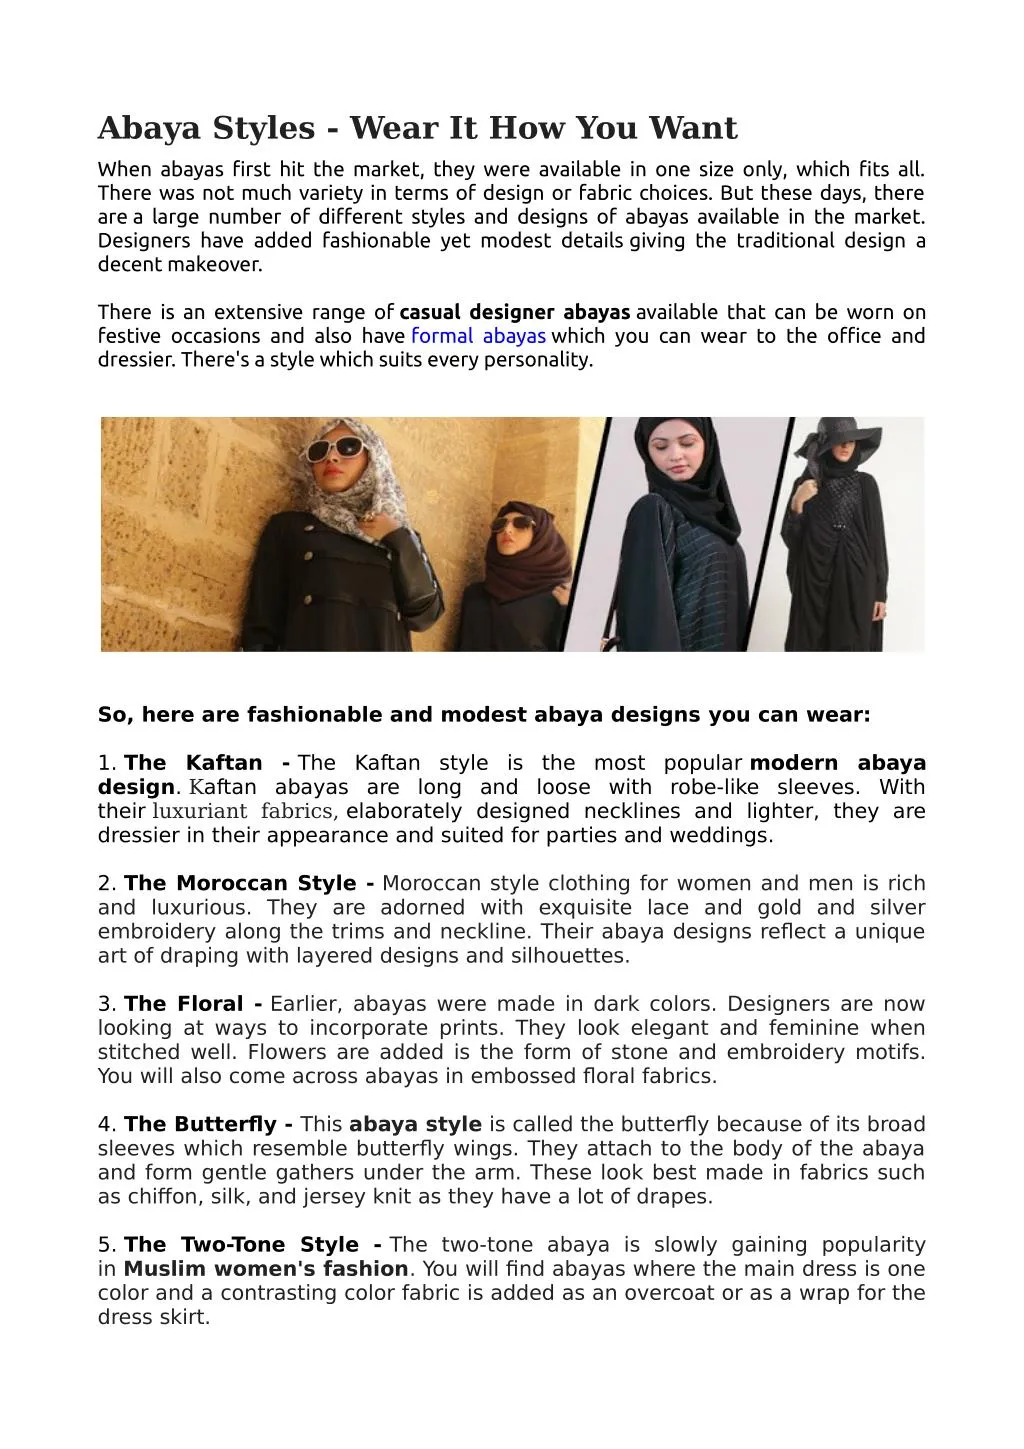 abaya styles wear it how you want